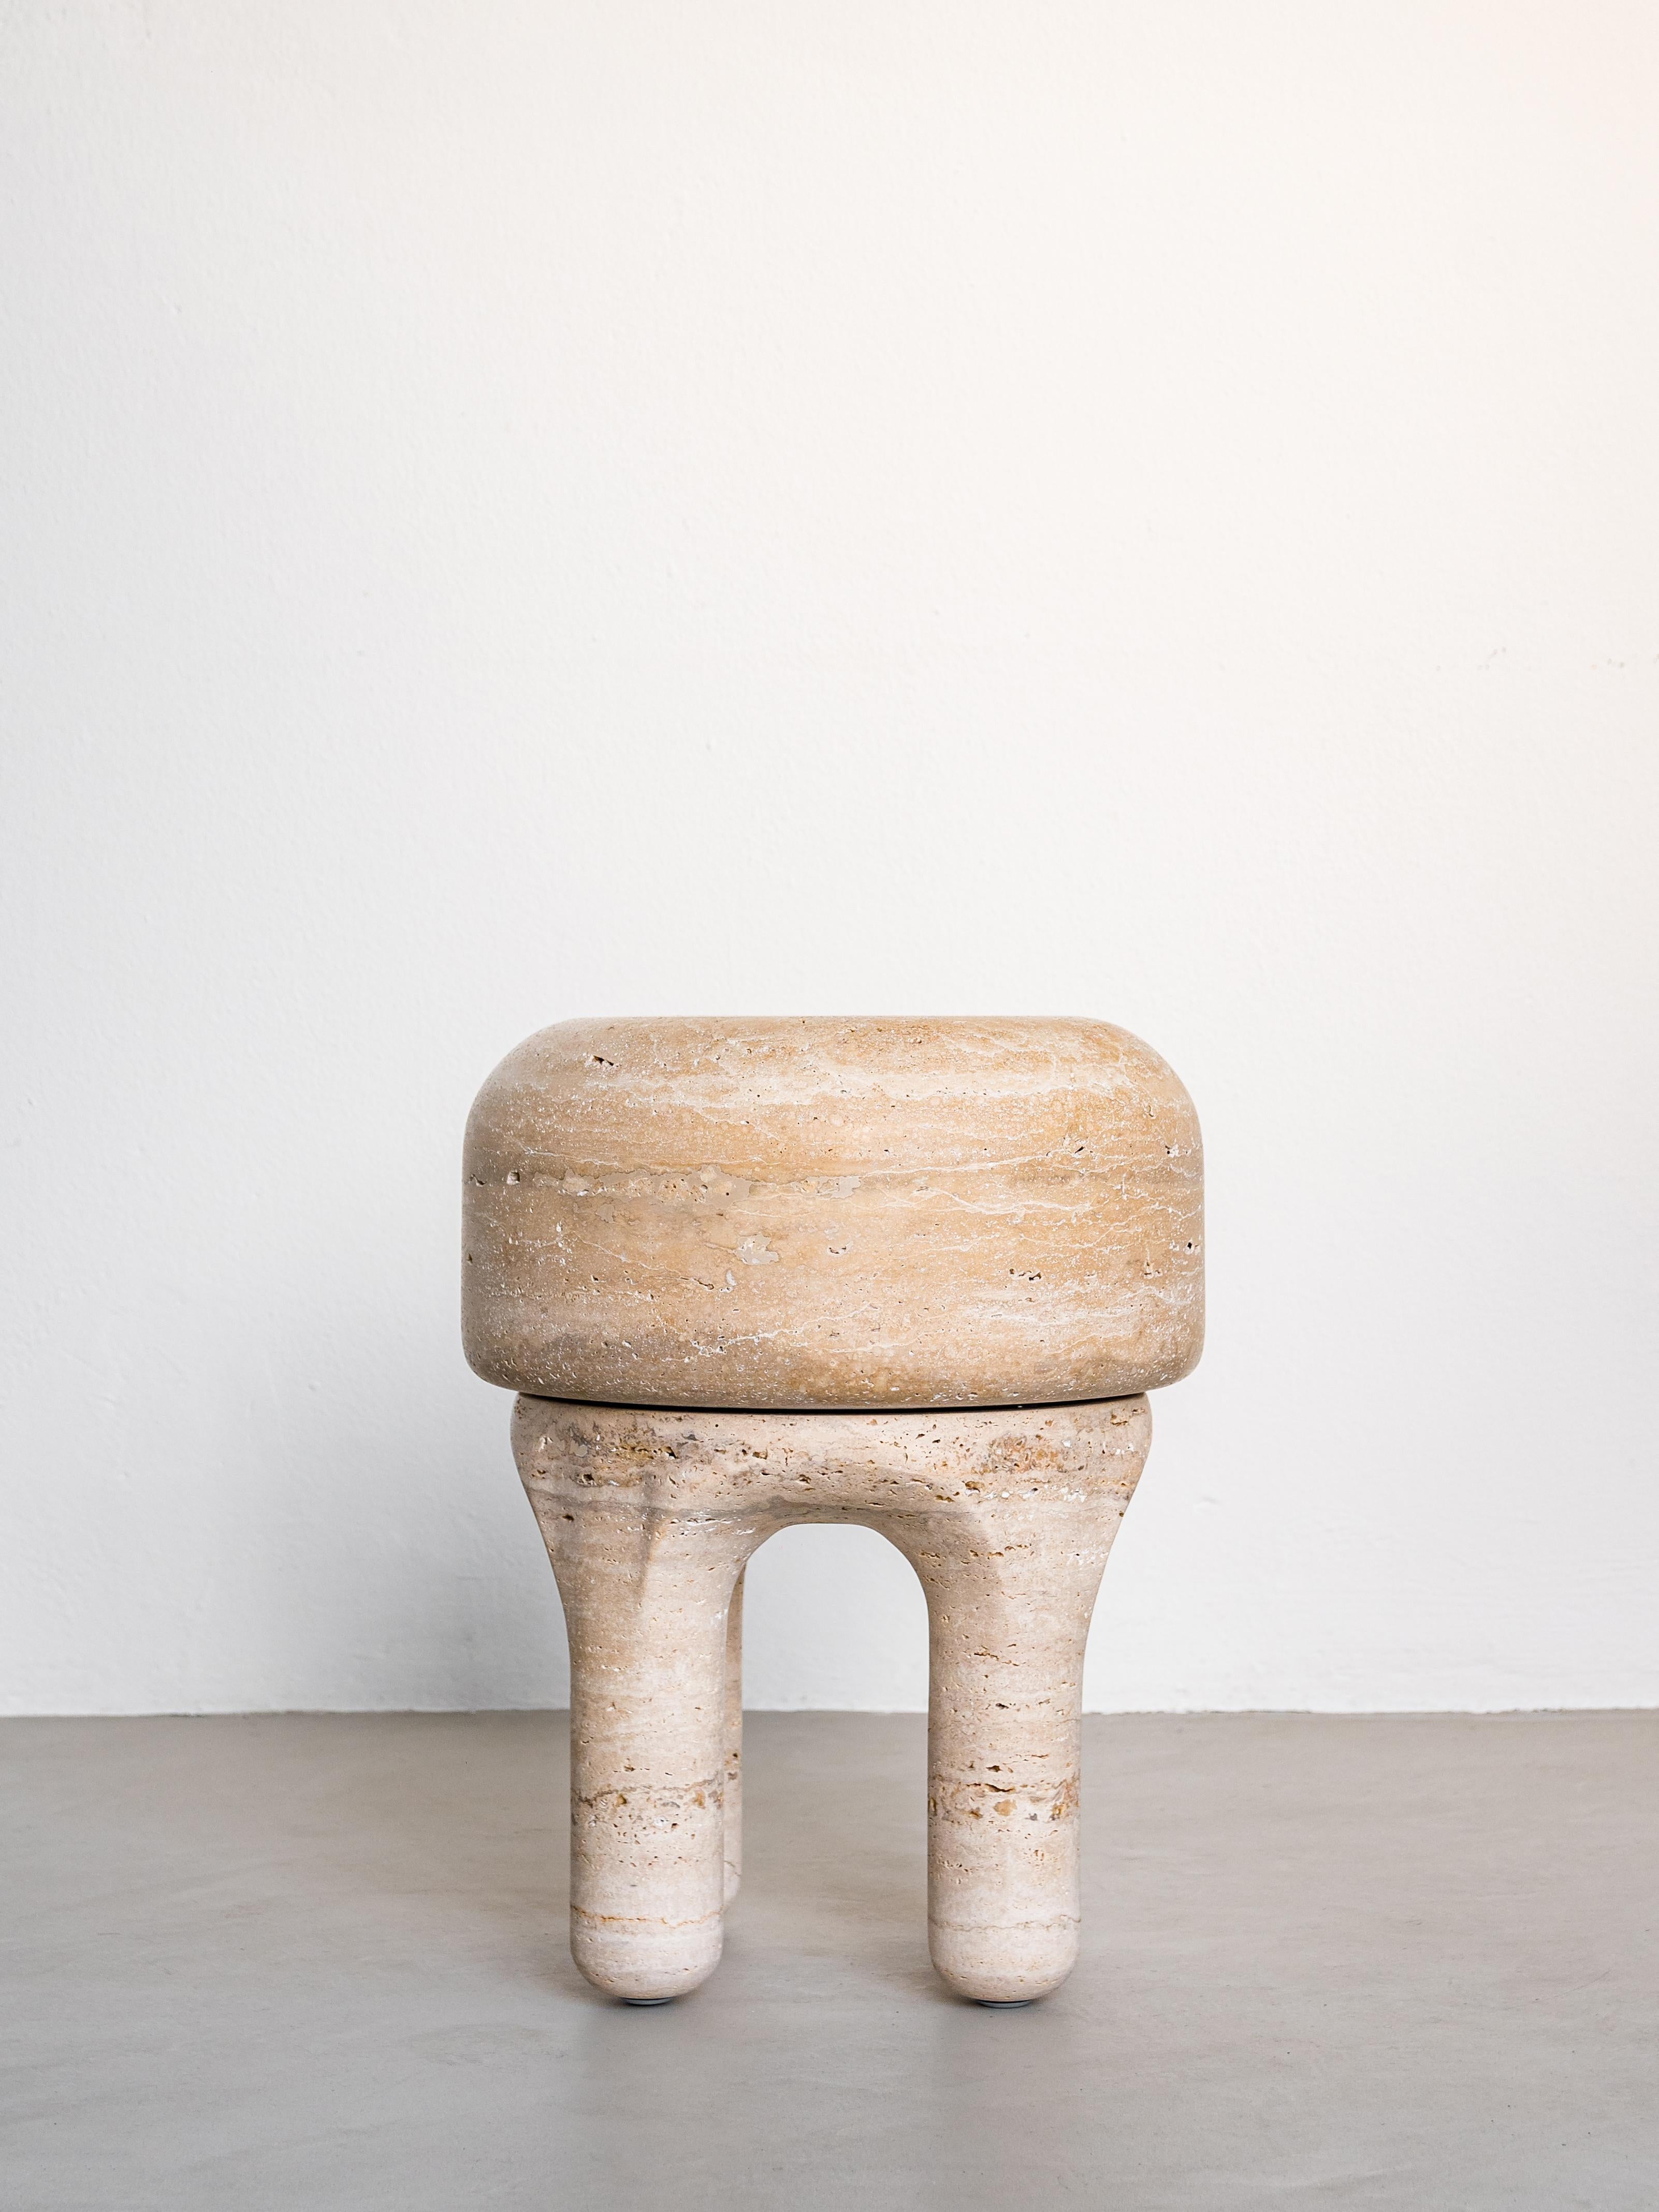 Marble Organic Modern Stool Table Sculpture in Travertine - Urban Wabi Style For Sale